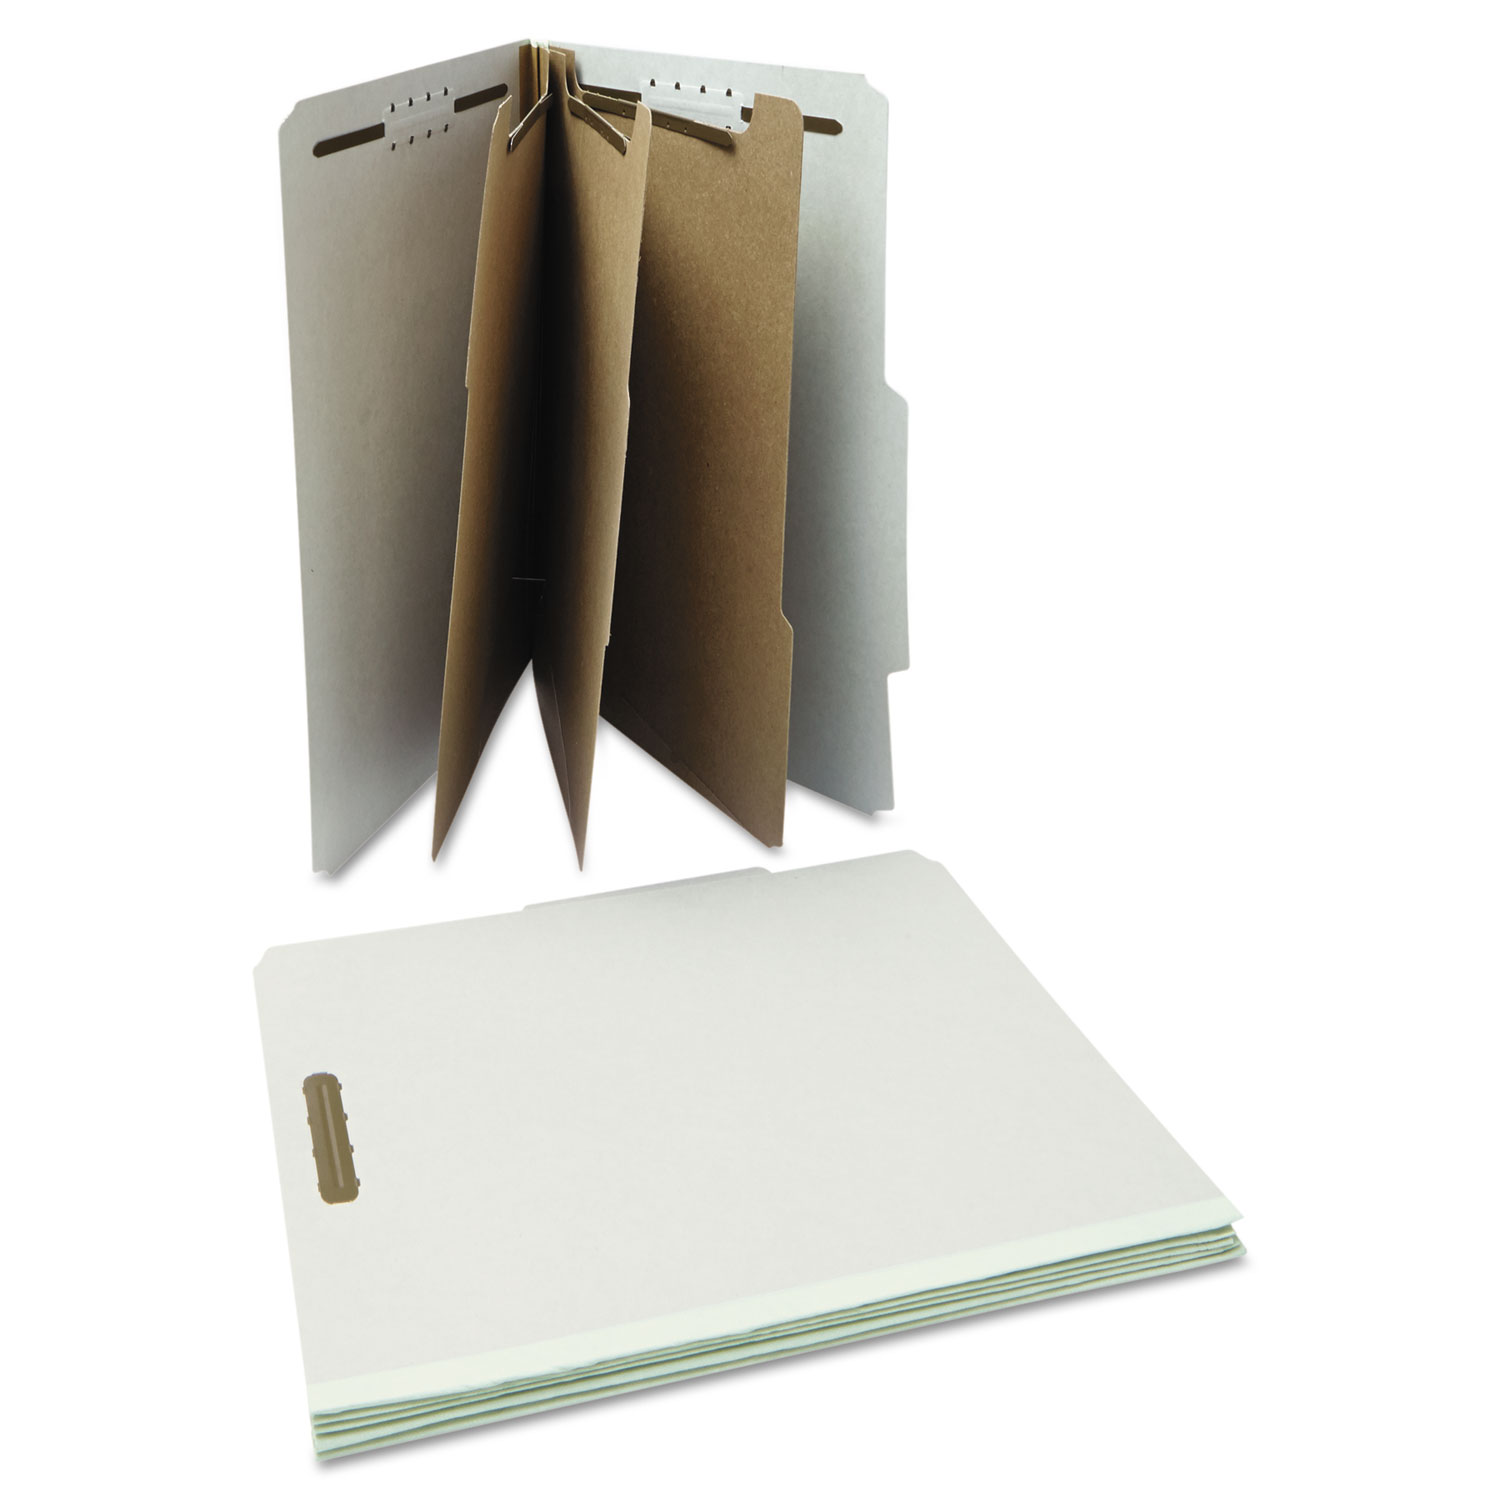 Pressboard Classification Folder, Letter, Eight-Section, Gray, 10/Box